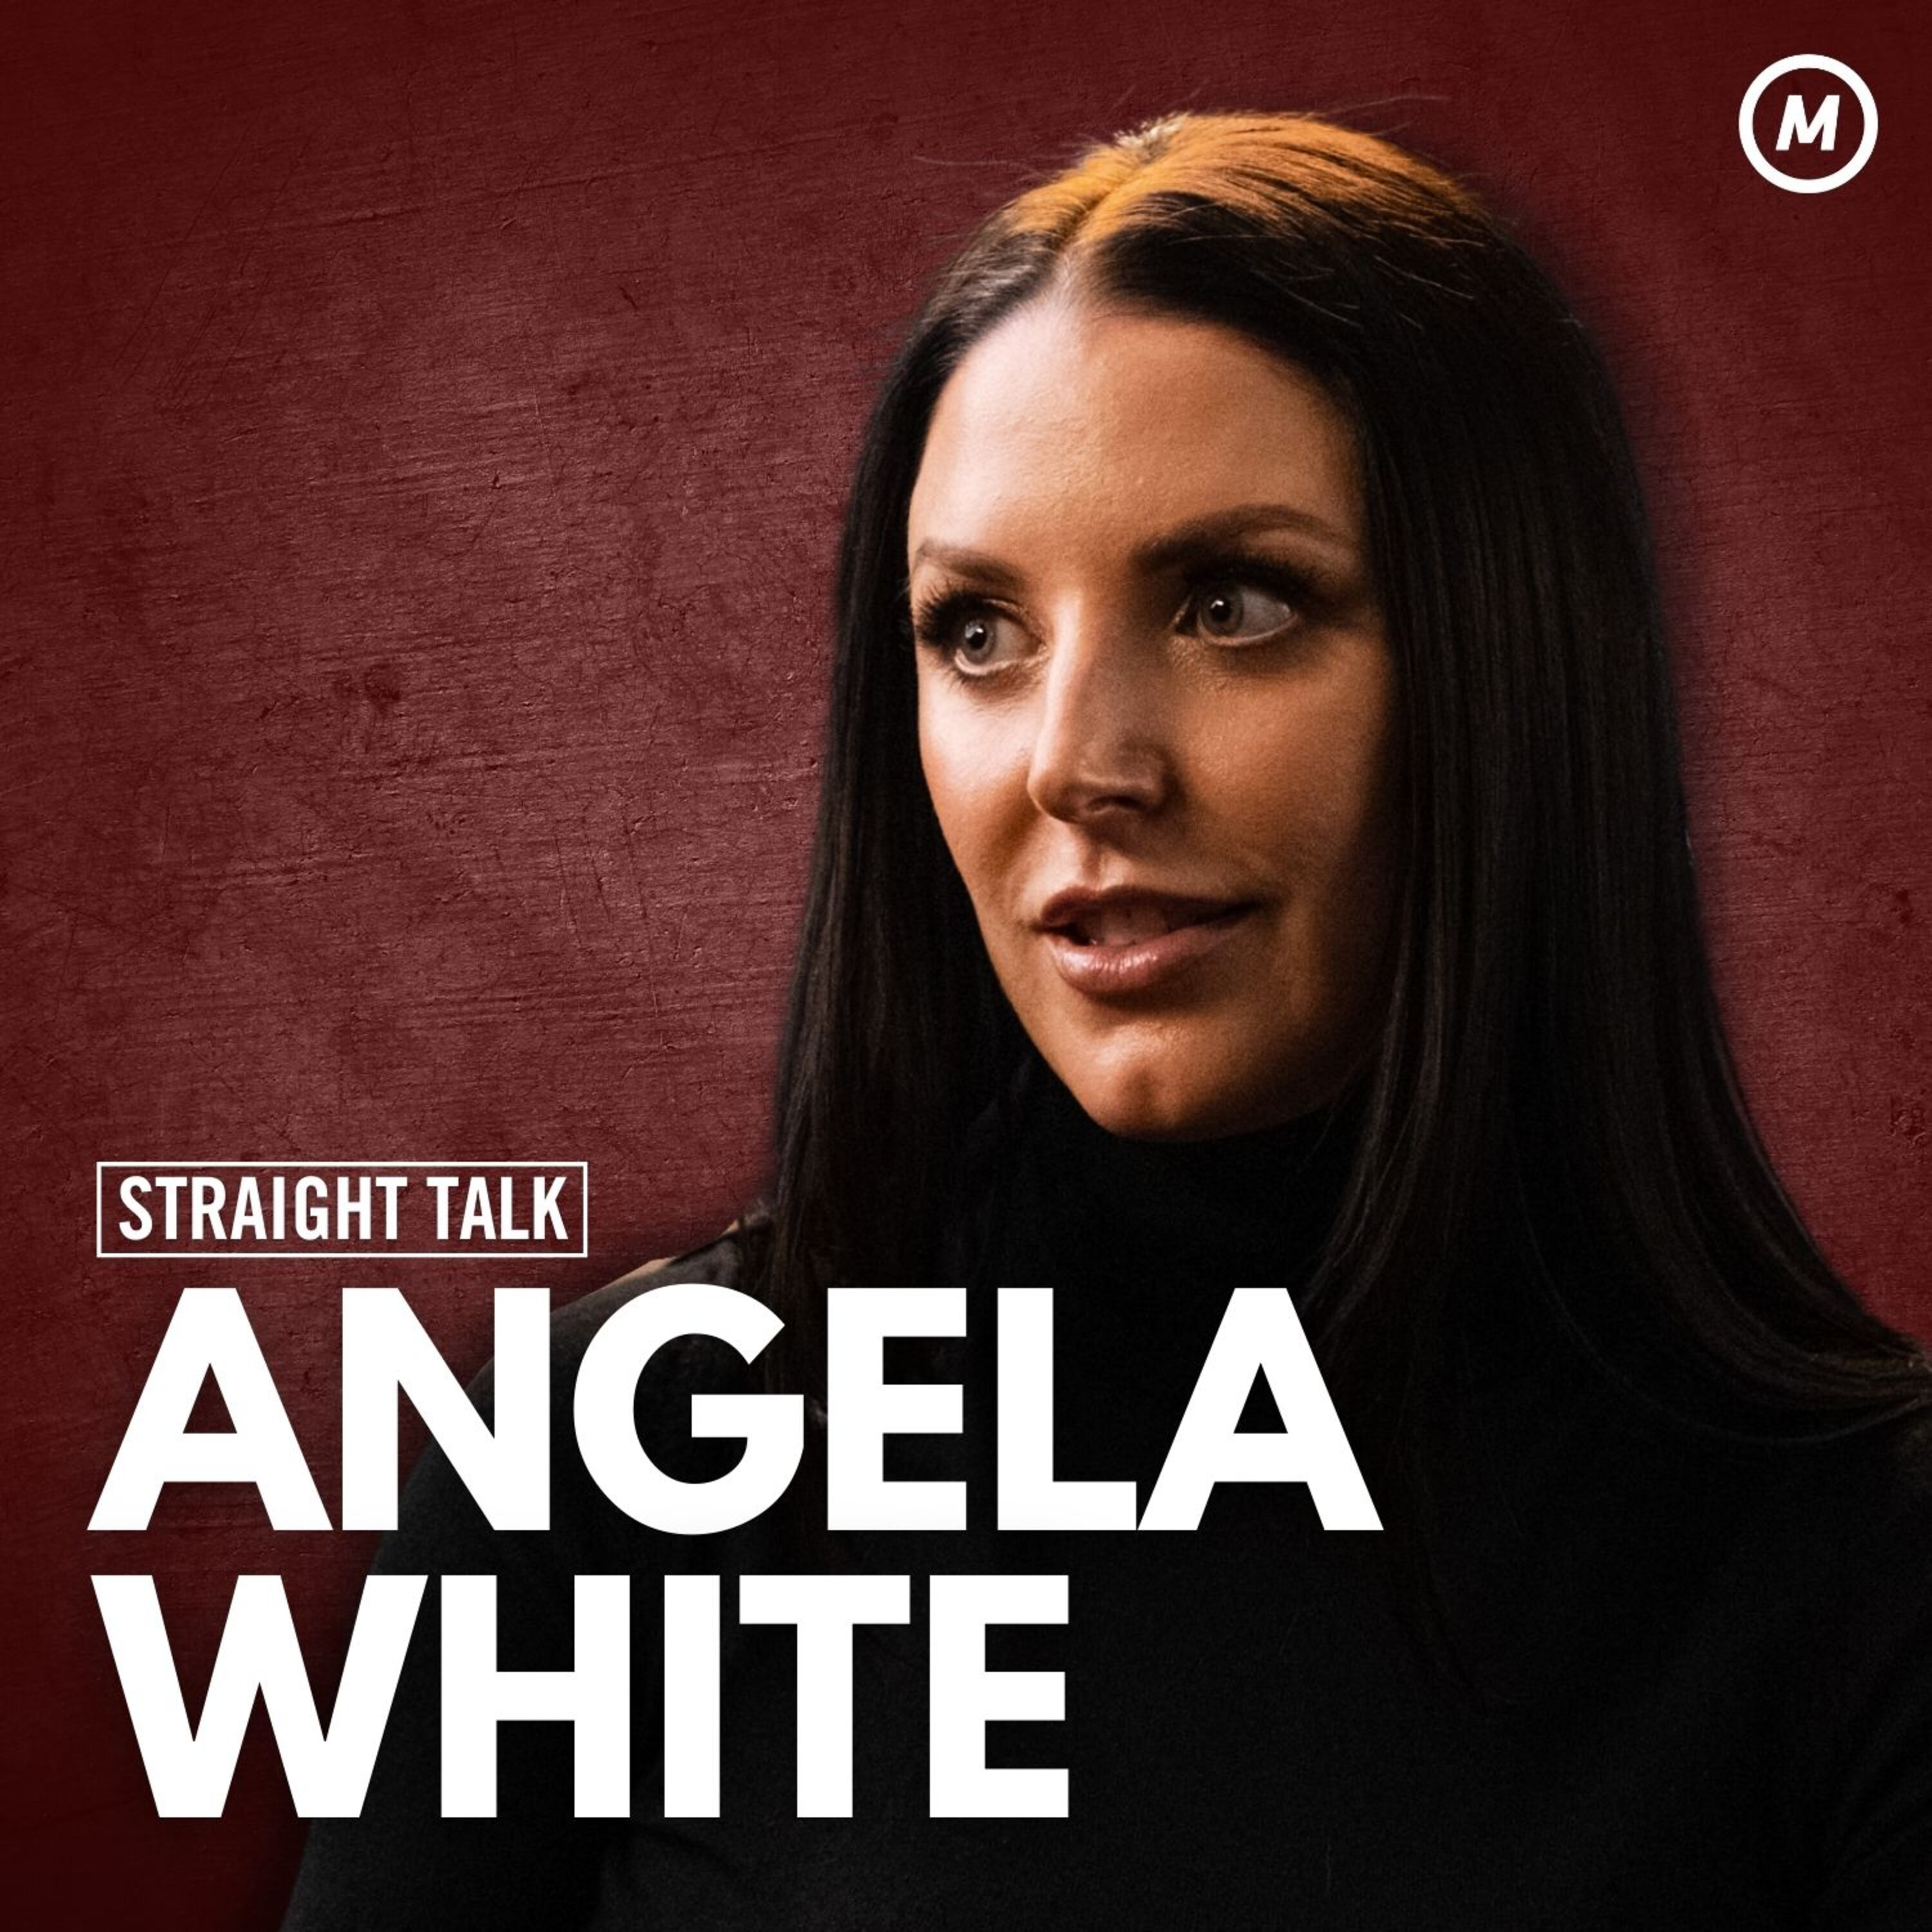 #56 Porn Star Angela White: I make very good money but I also work very hard